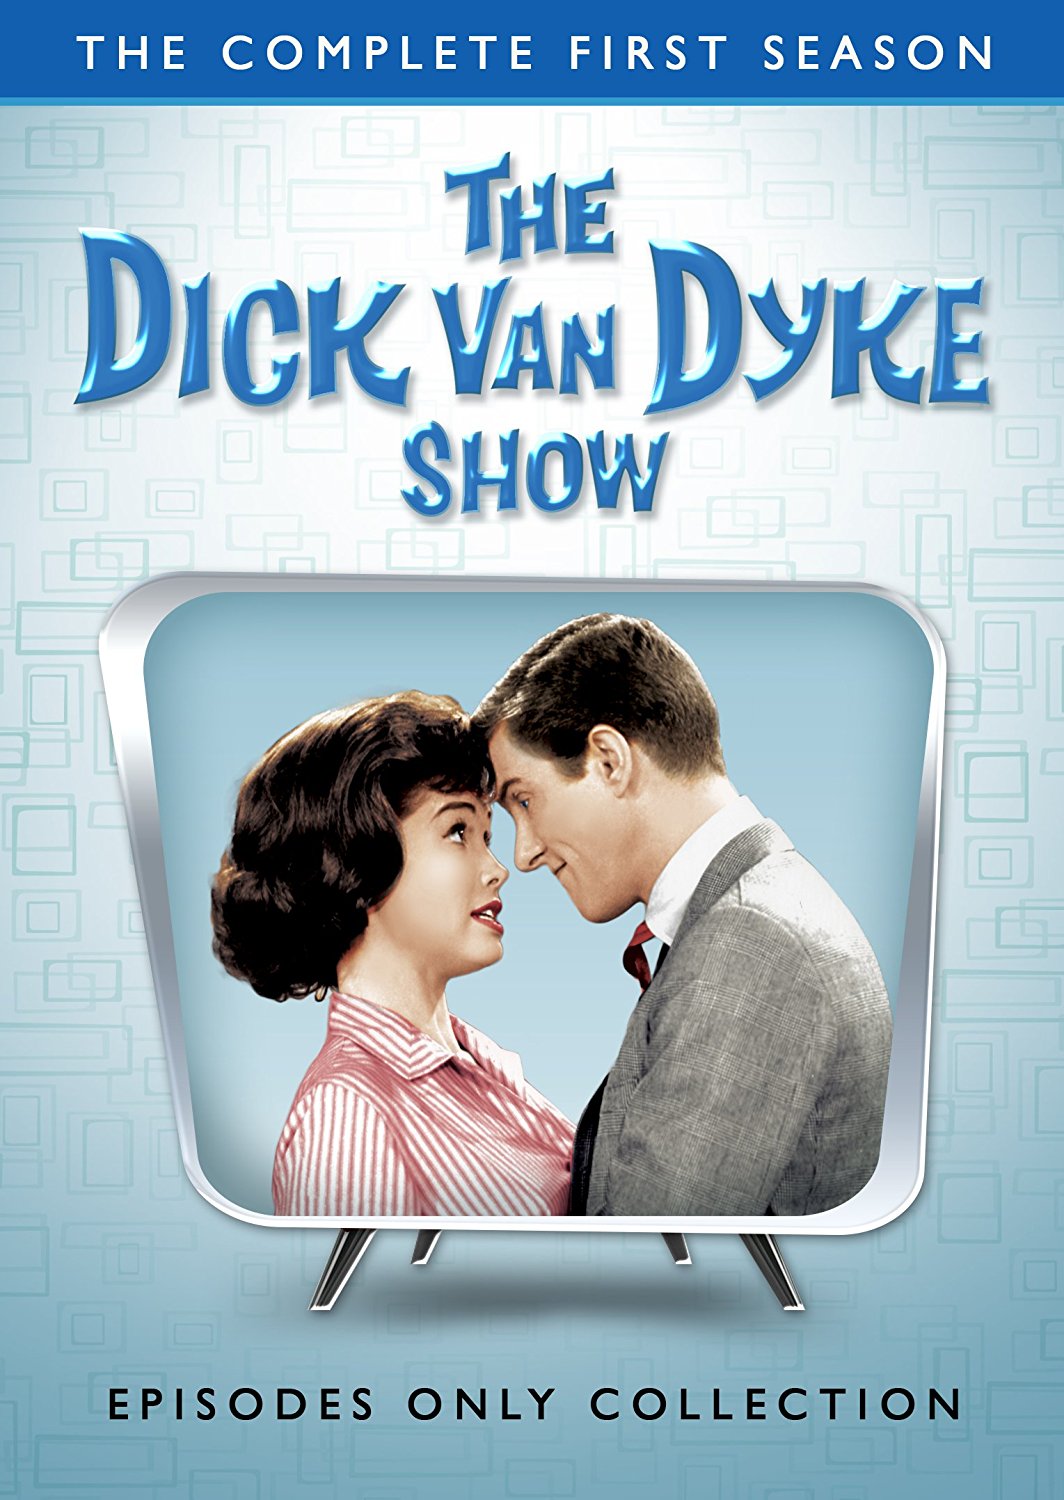 Dick van dyke show best episode of all time 1